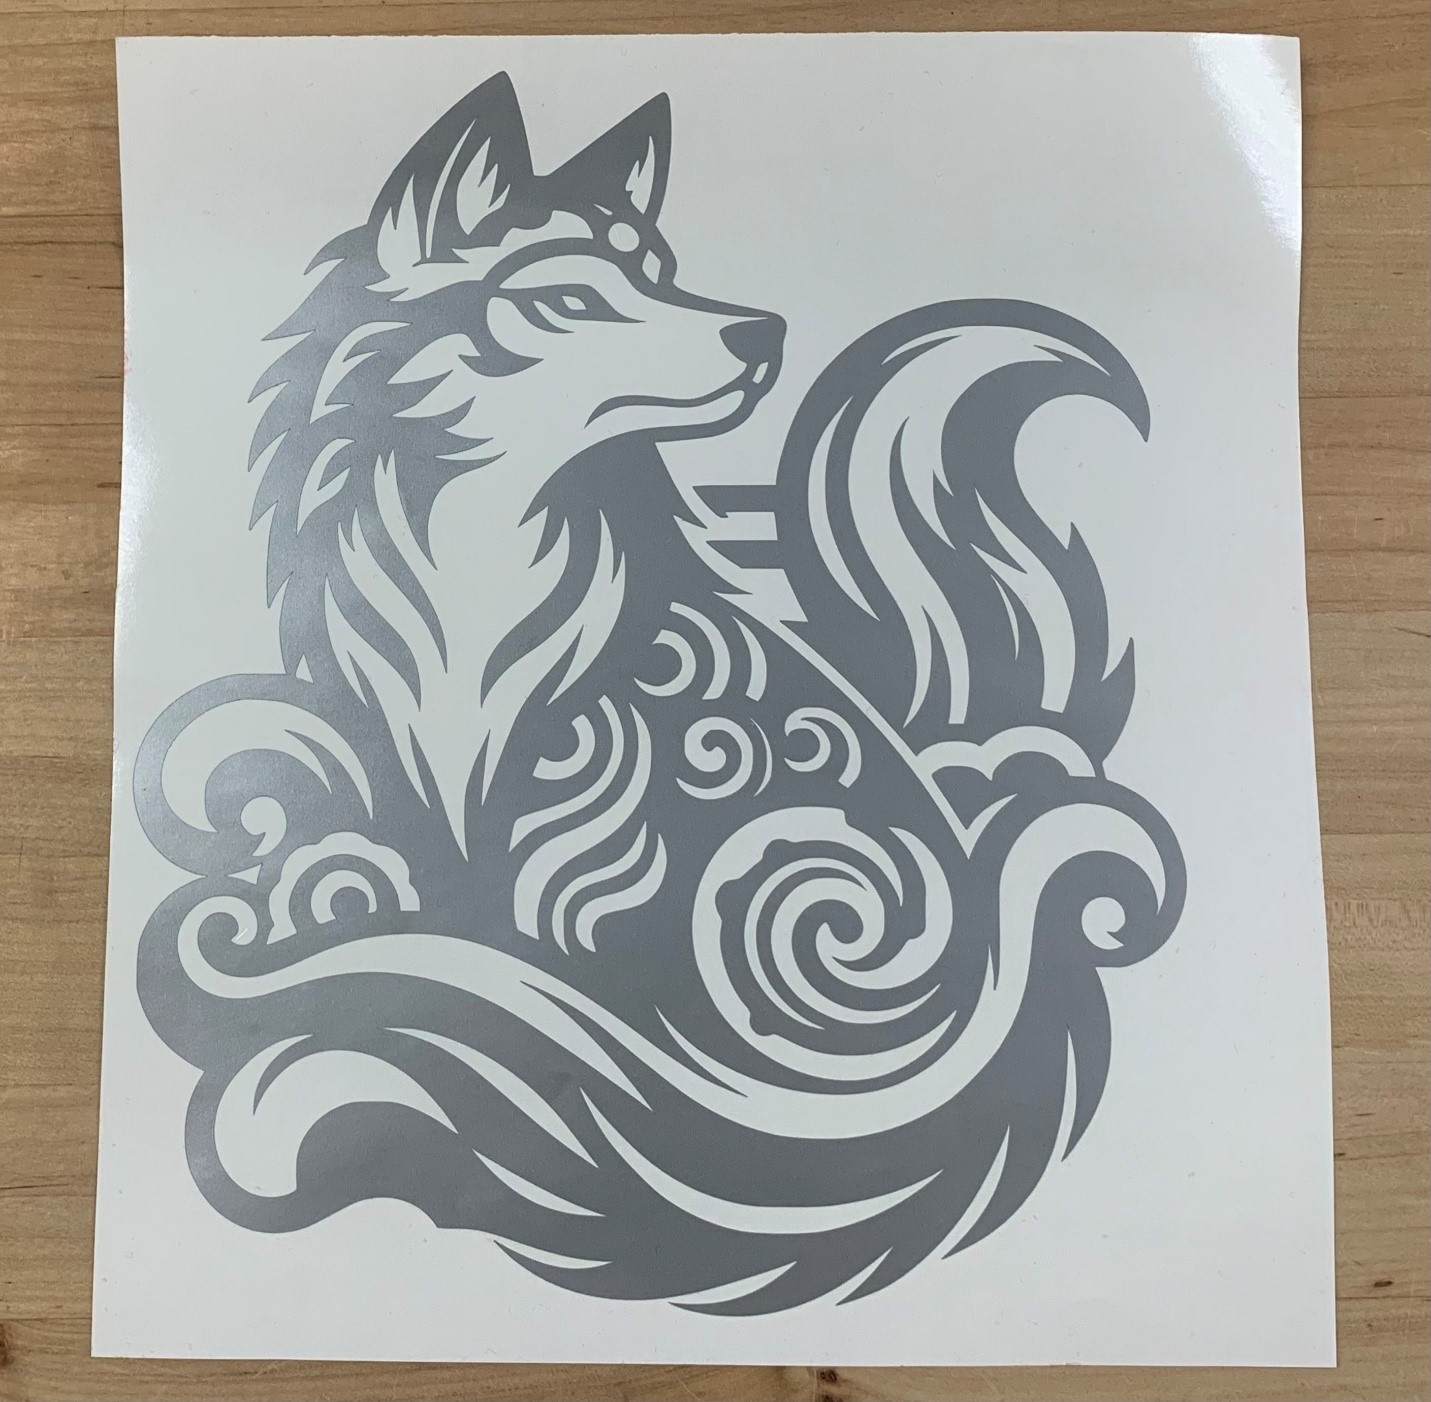 A vinyl cut design of a wolf with swirls.